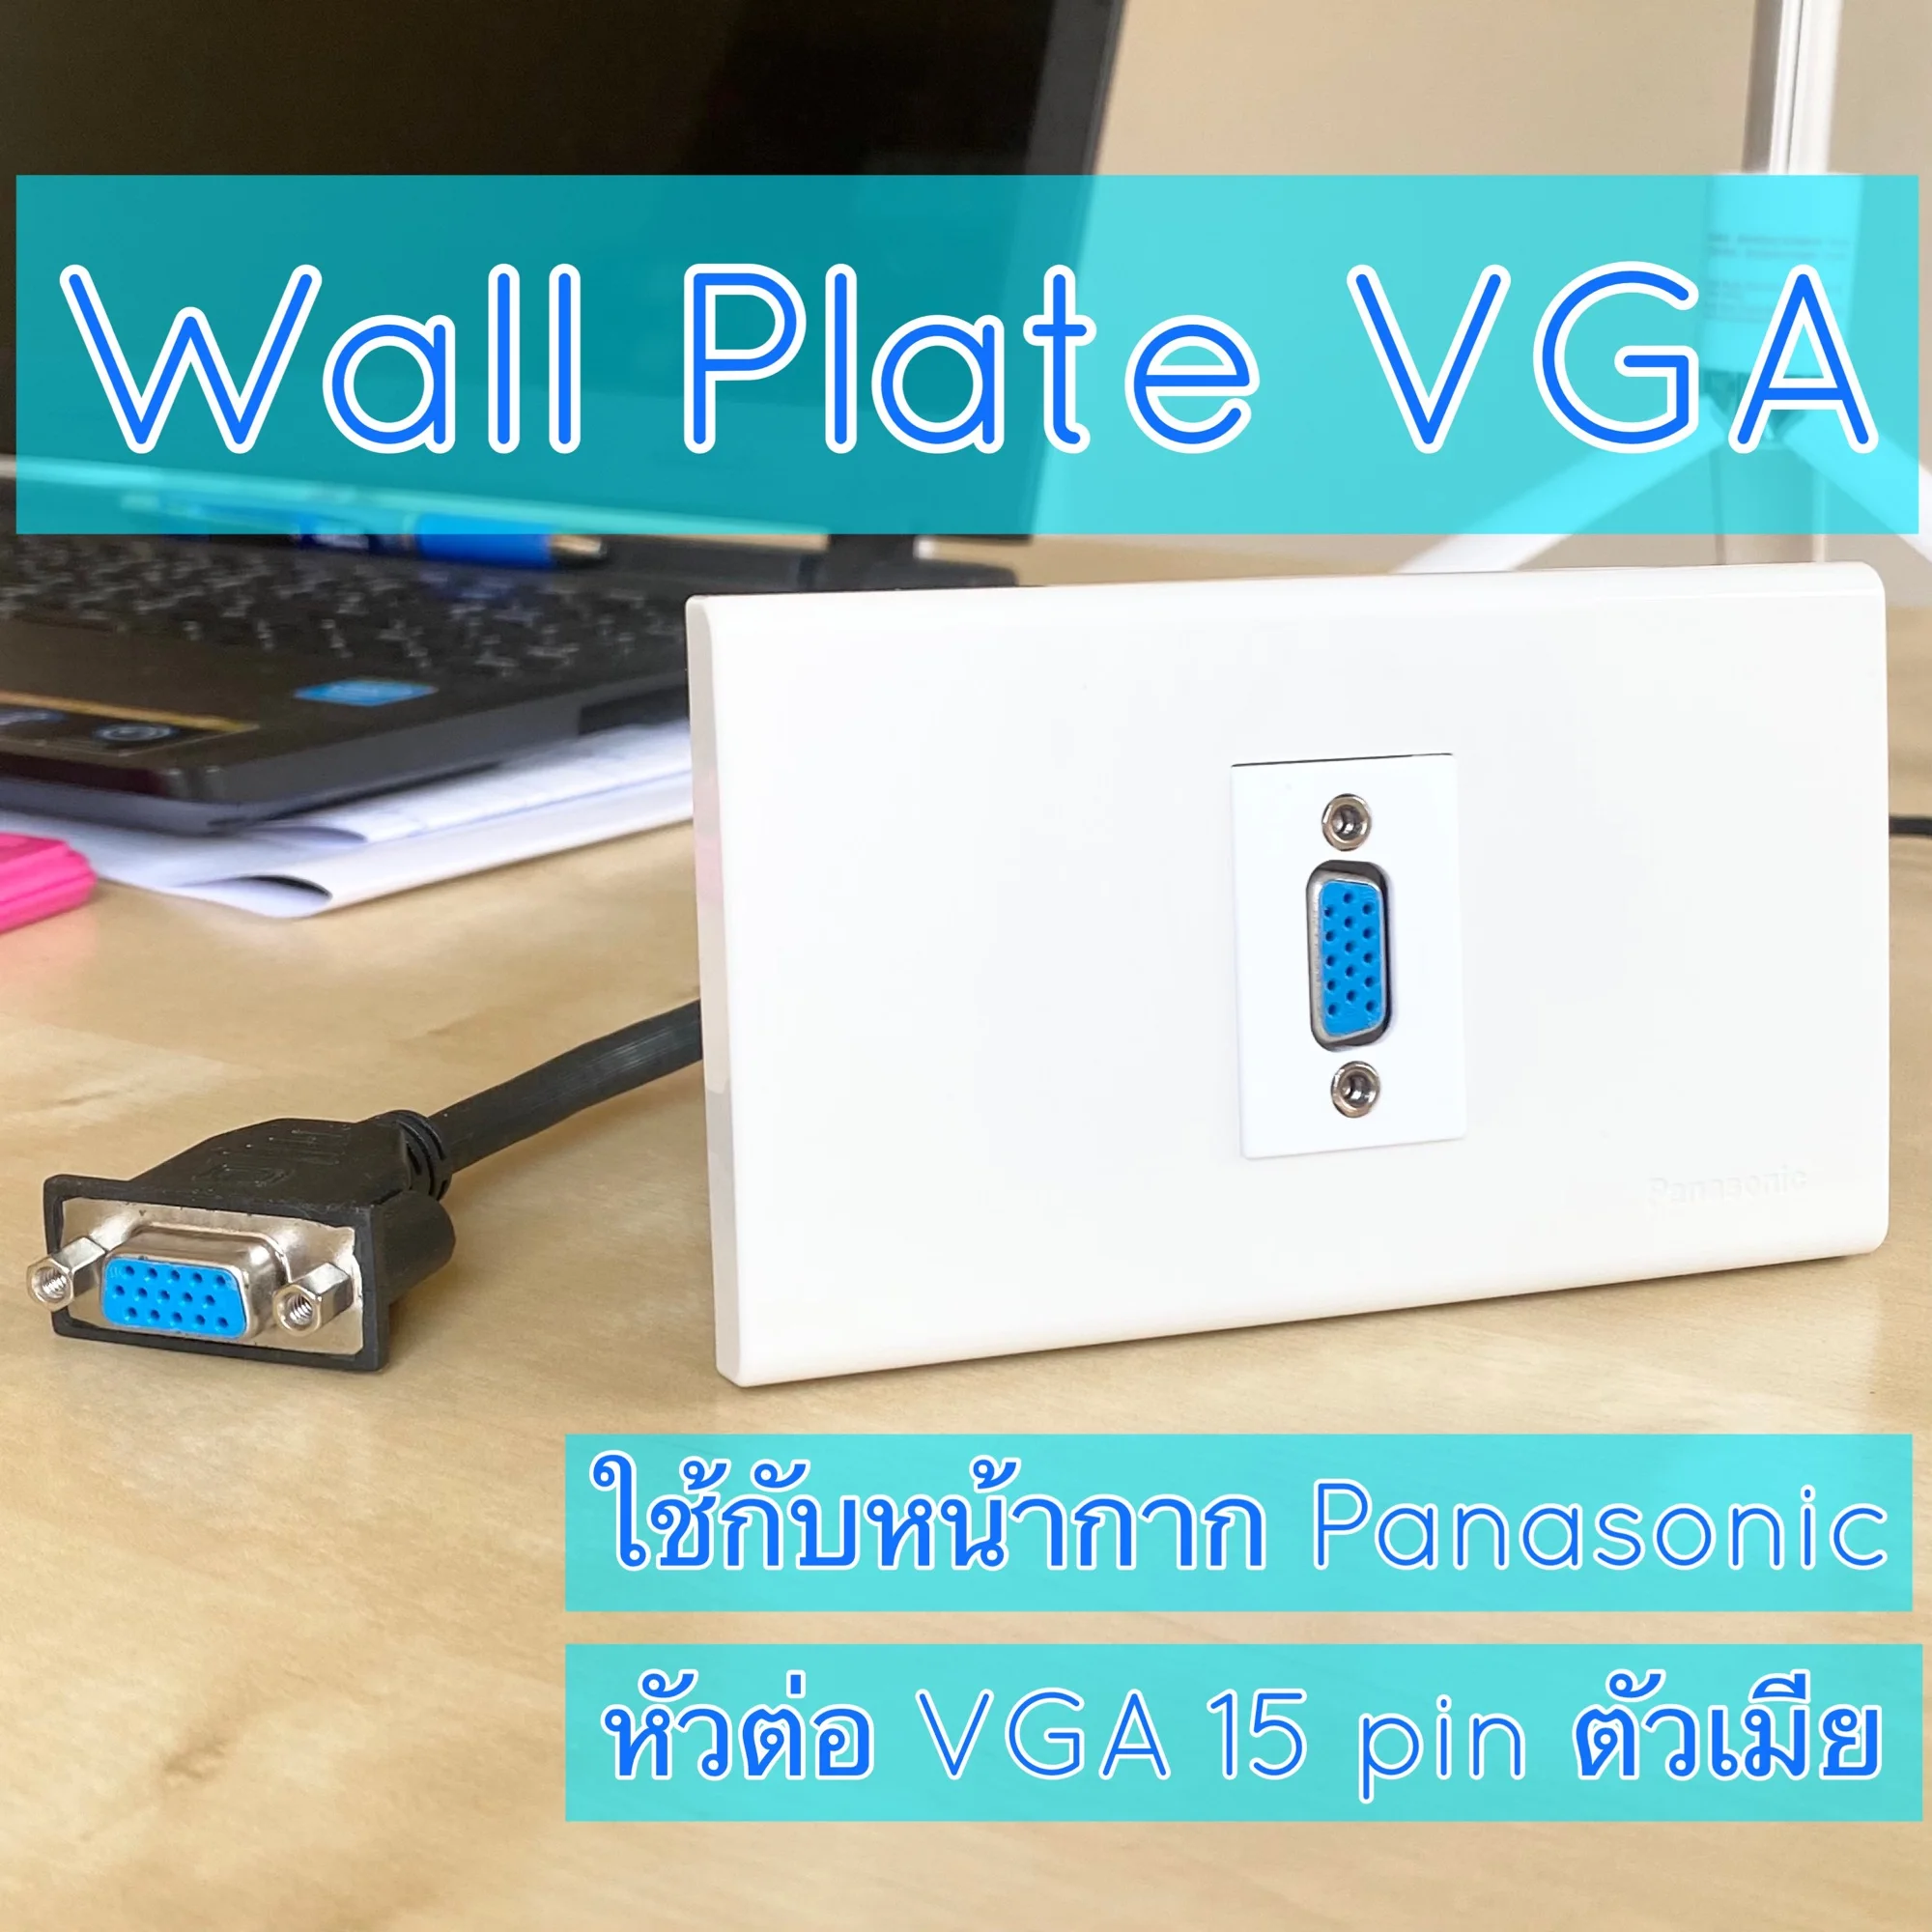 VGA Wall Plate (Panasonic) พร้อมสายต่อ VGA Cable Connector D-sub 15 pins ต่อสัญญาณได้ดีมาก ภาพคมชัด ไม่มีเงาซ้อน